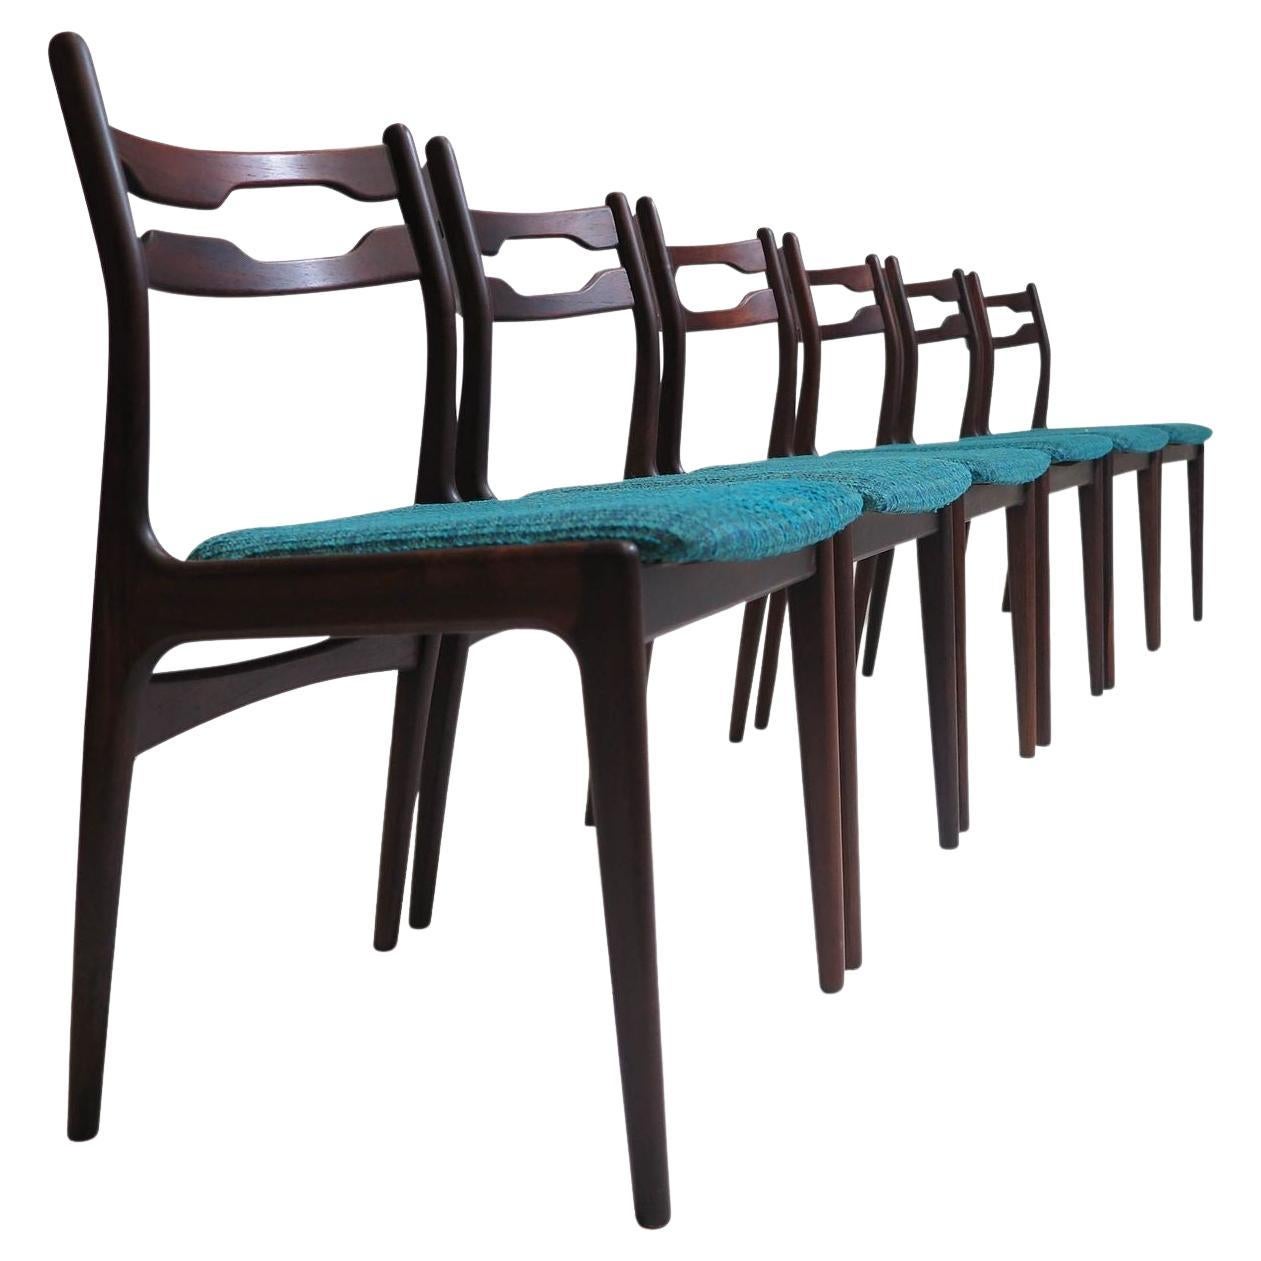 Johannes Andersen for Uldum Danish Rosewood Dining Chairs